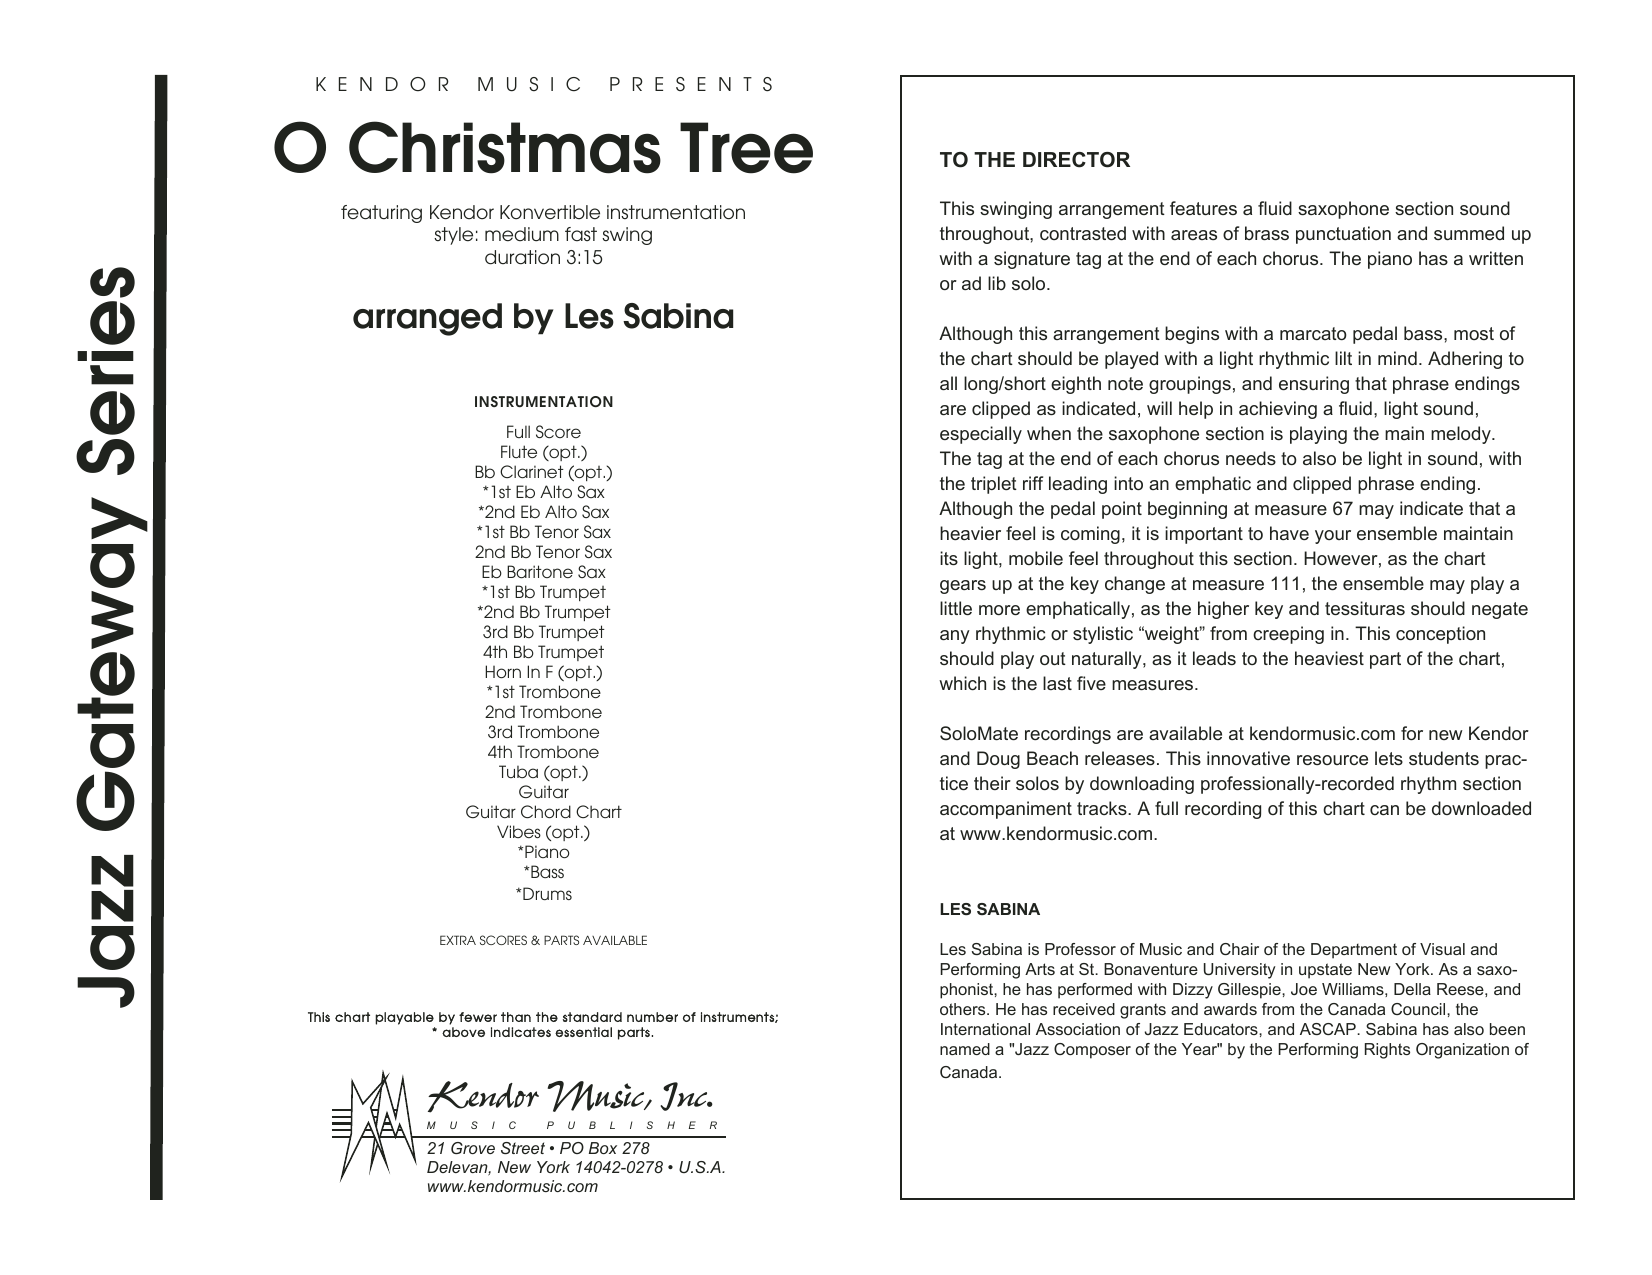 Download Les Sabina O Christmas Tree - Full Score Sheet Music